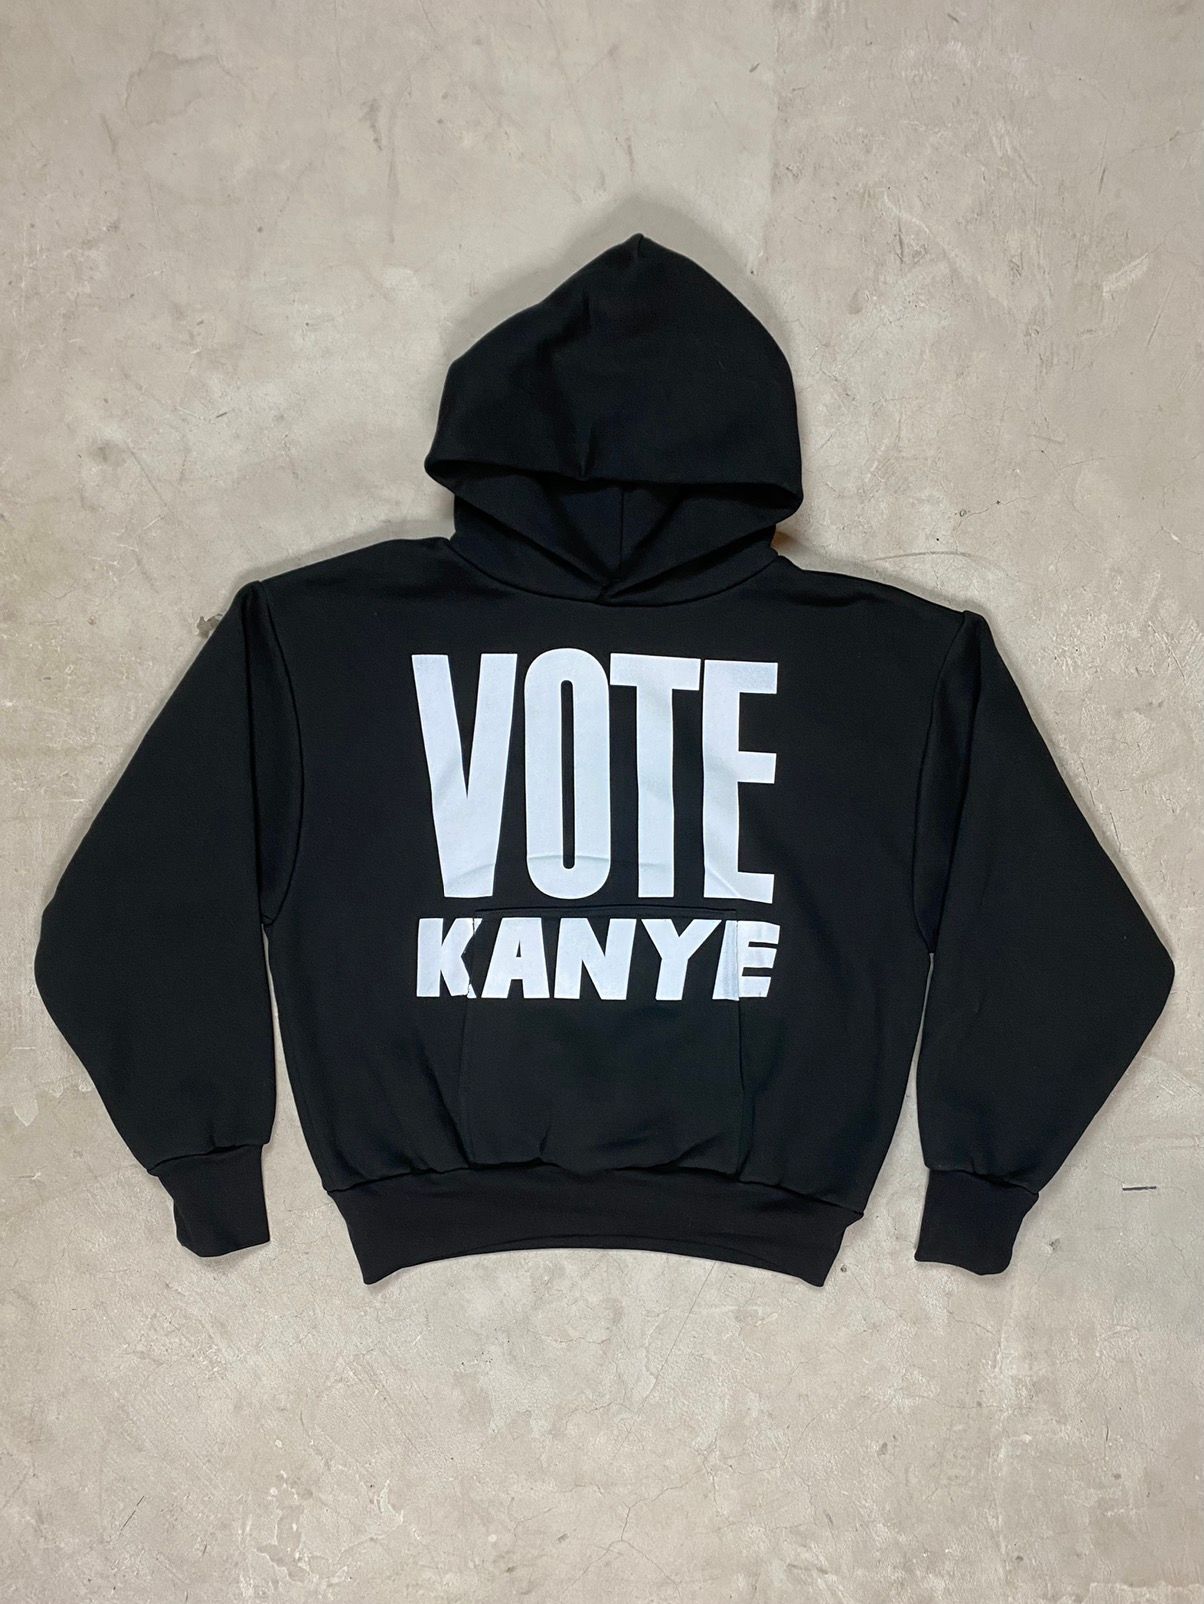 Kanye West Vote Kanye Hoodie Size US L / EU 52-54 / 3 - 1 Preview